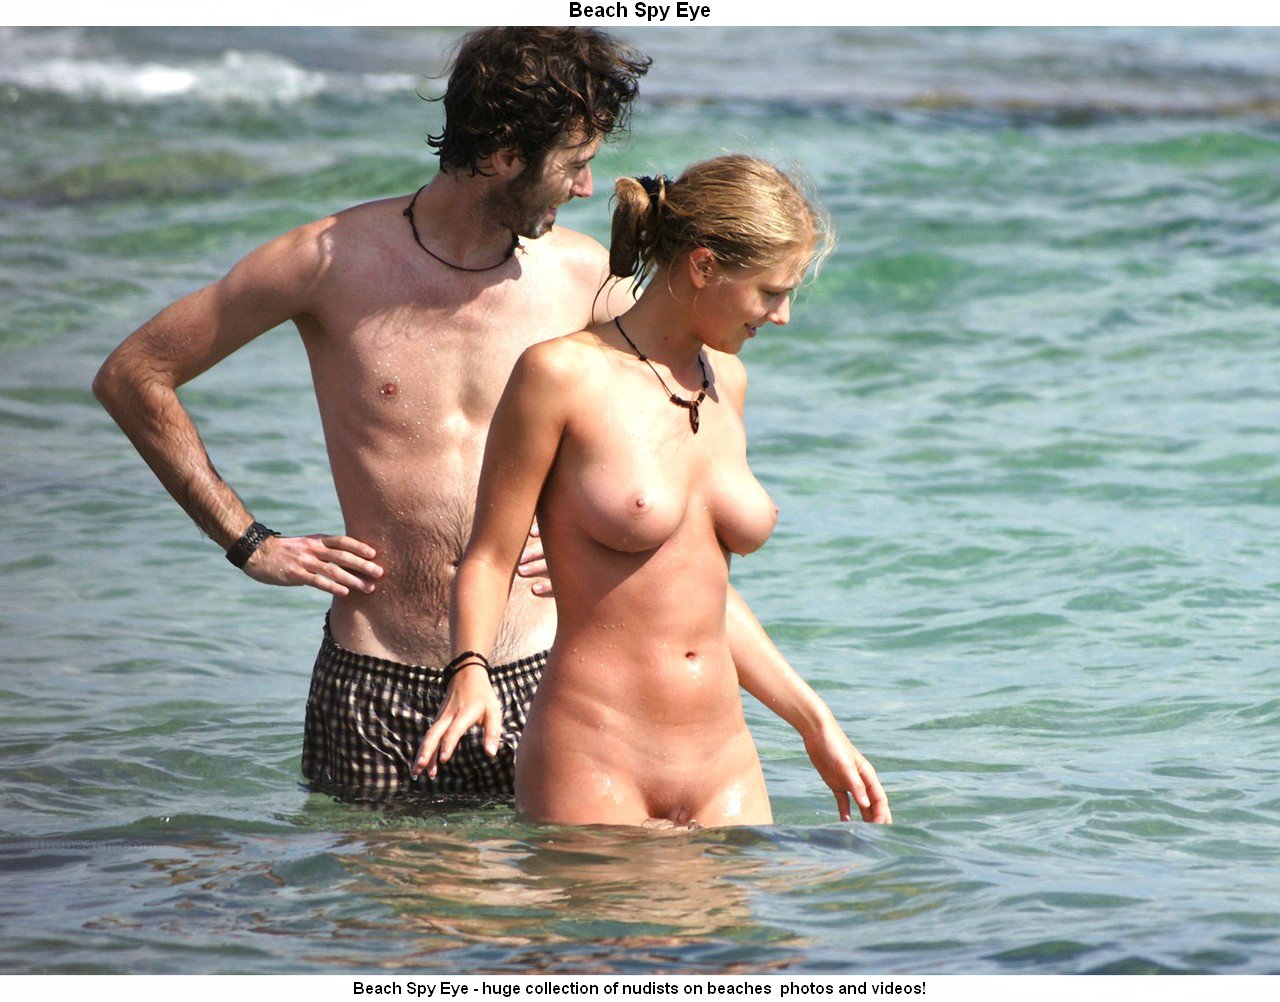 Nude Beaches Pics Nudist beach photos - tanned girl nudists flirts.. photography 5